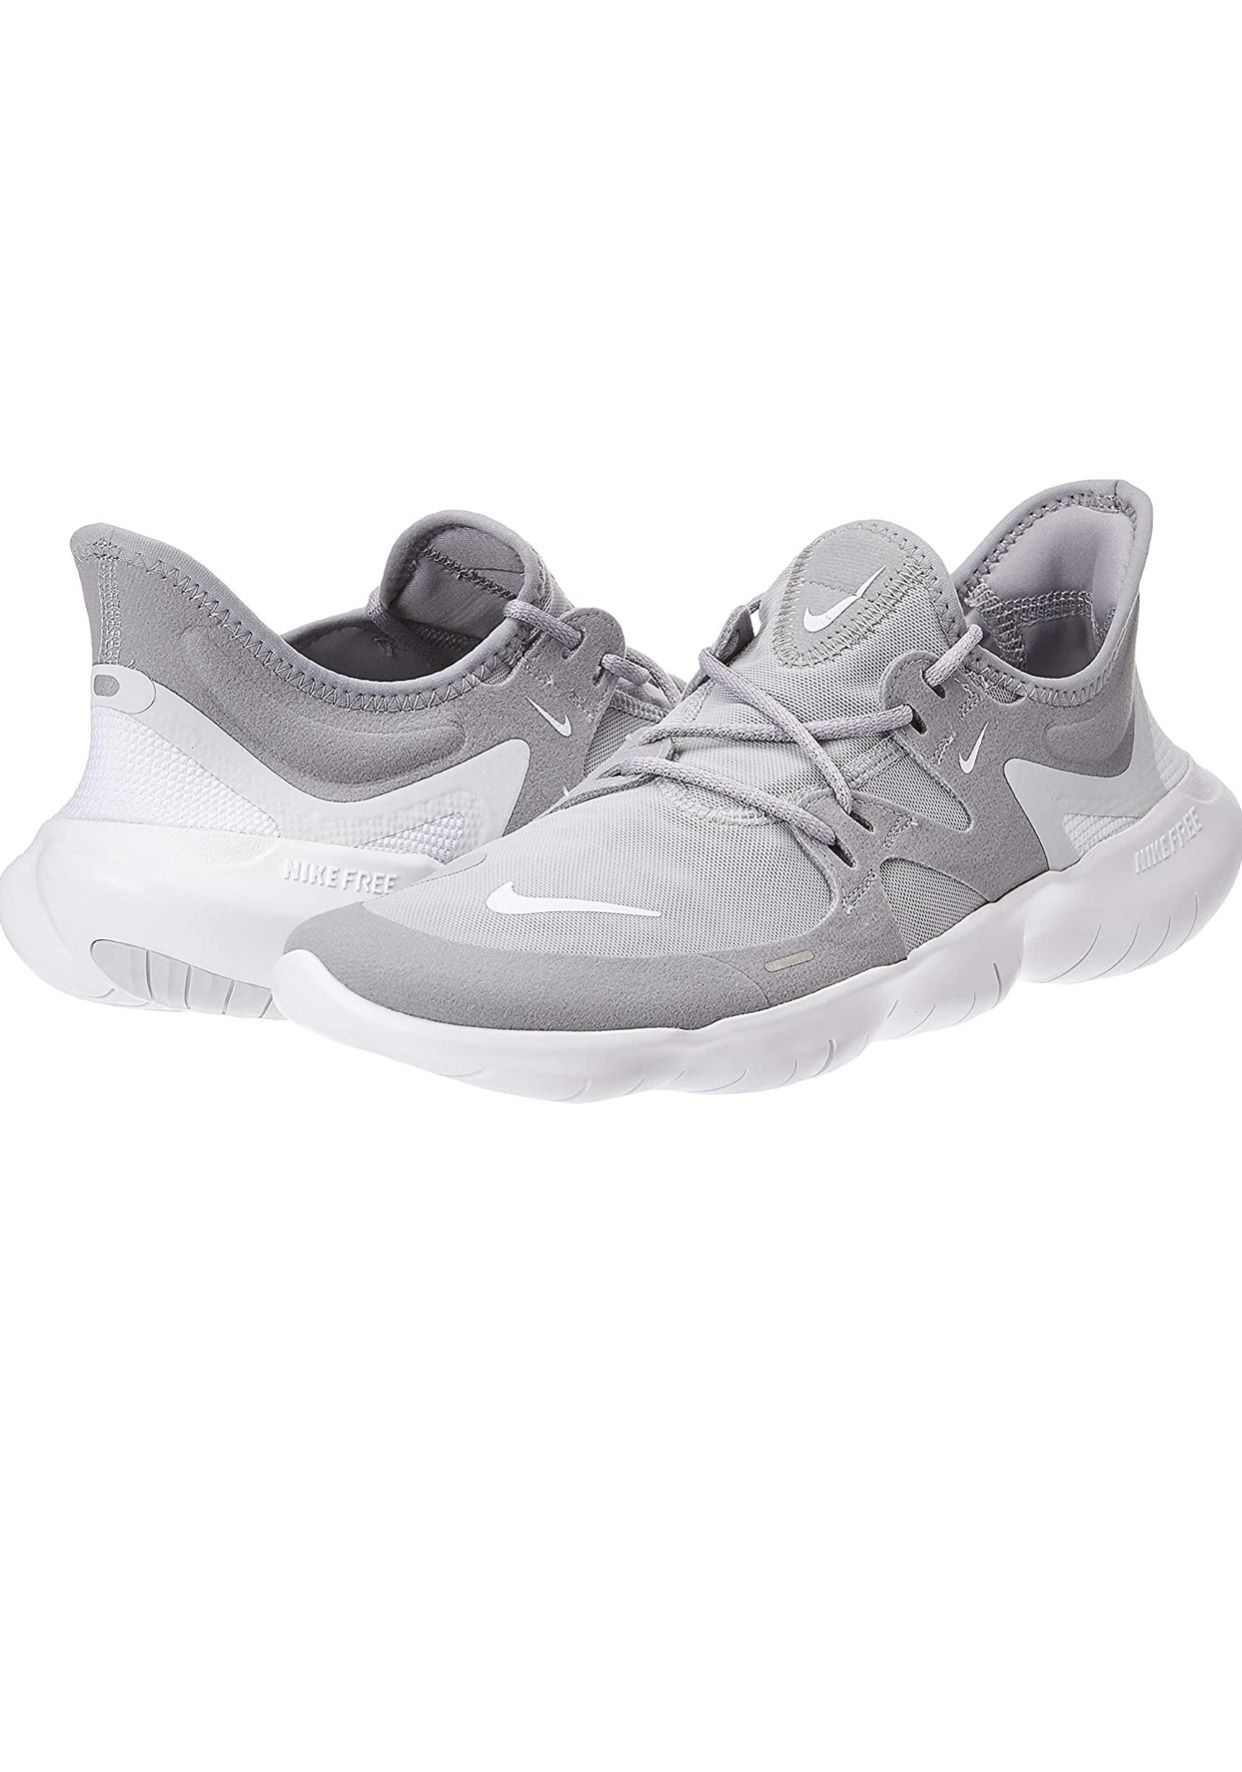 Gray Nike Free Run Shoes Size 13